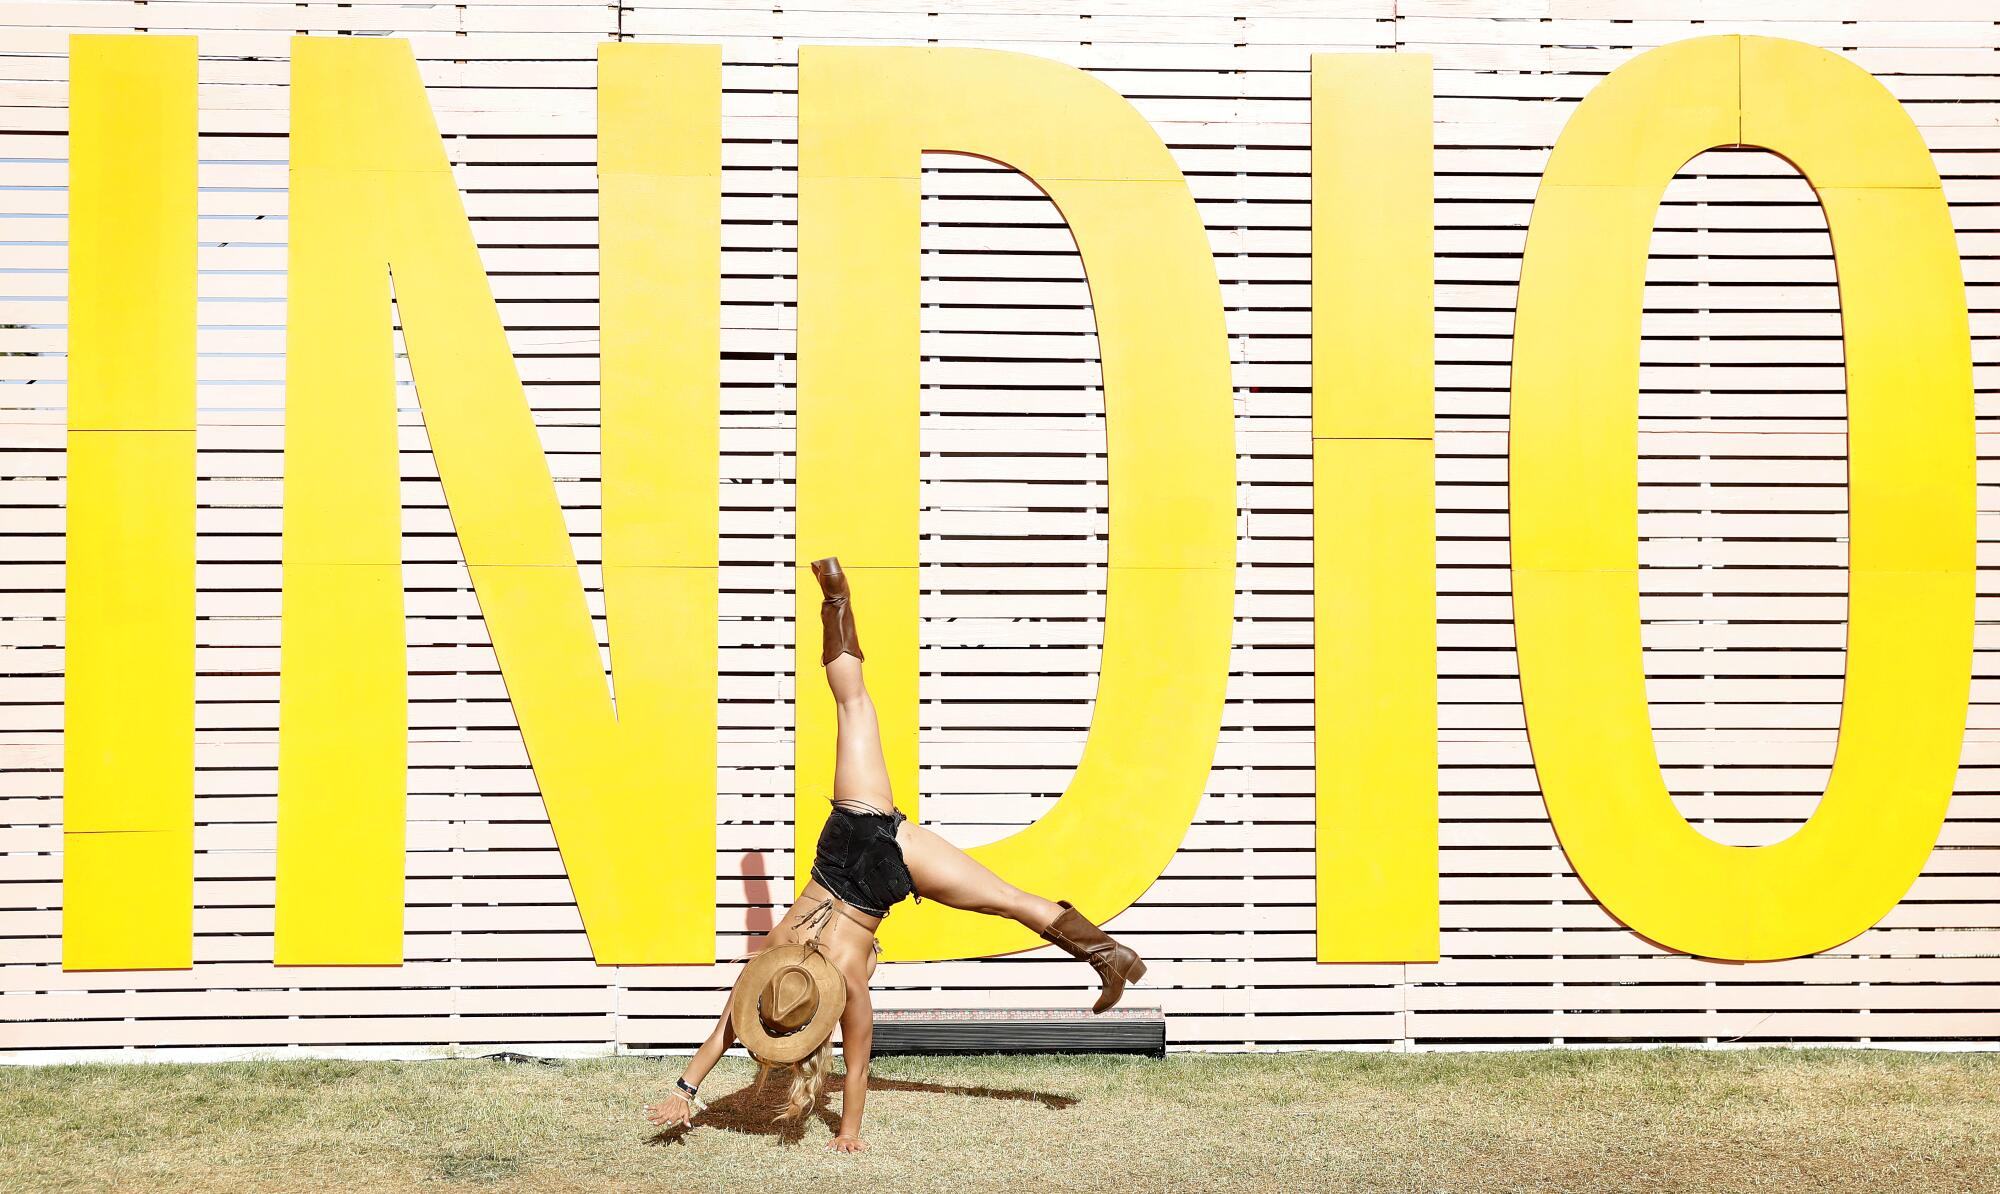 Jennifer Saephanh does a cartwheel on the final day of Coachella.